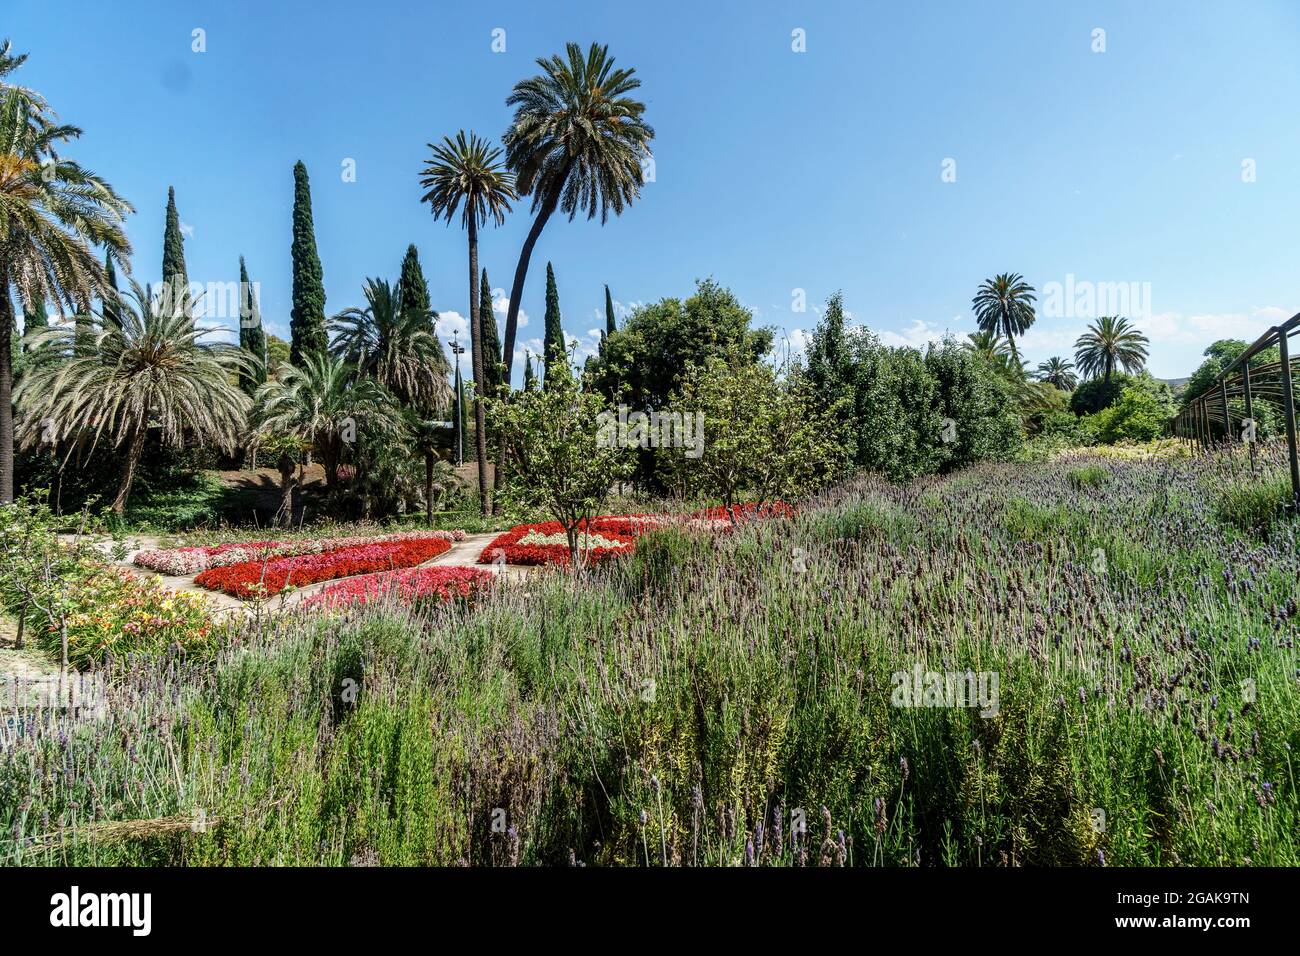 Botanischer Garten von Malaga, Jardín Botánico-Histórico La Concepción, Costa del Sol, Provinz Malaga, Andalusien, Spanien, Europa, Stock Photo